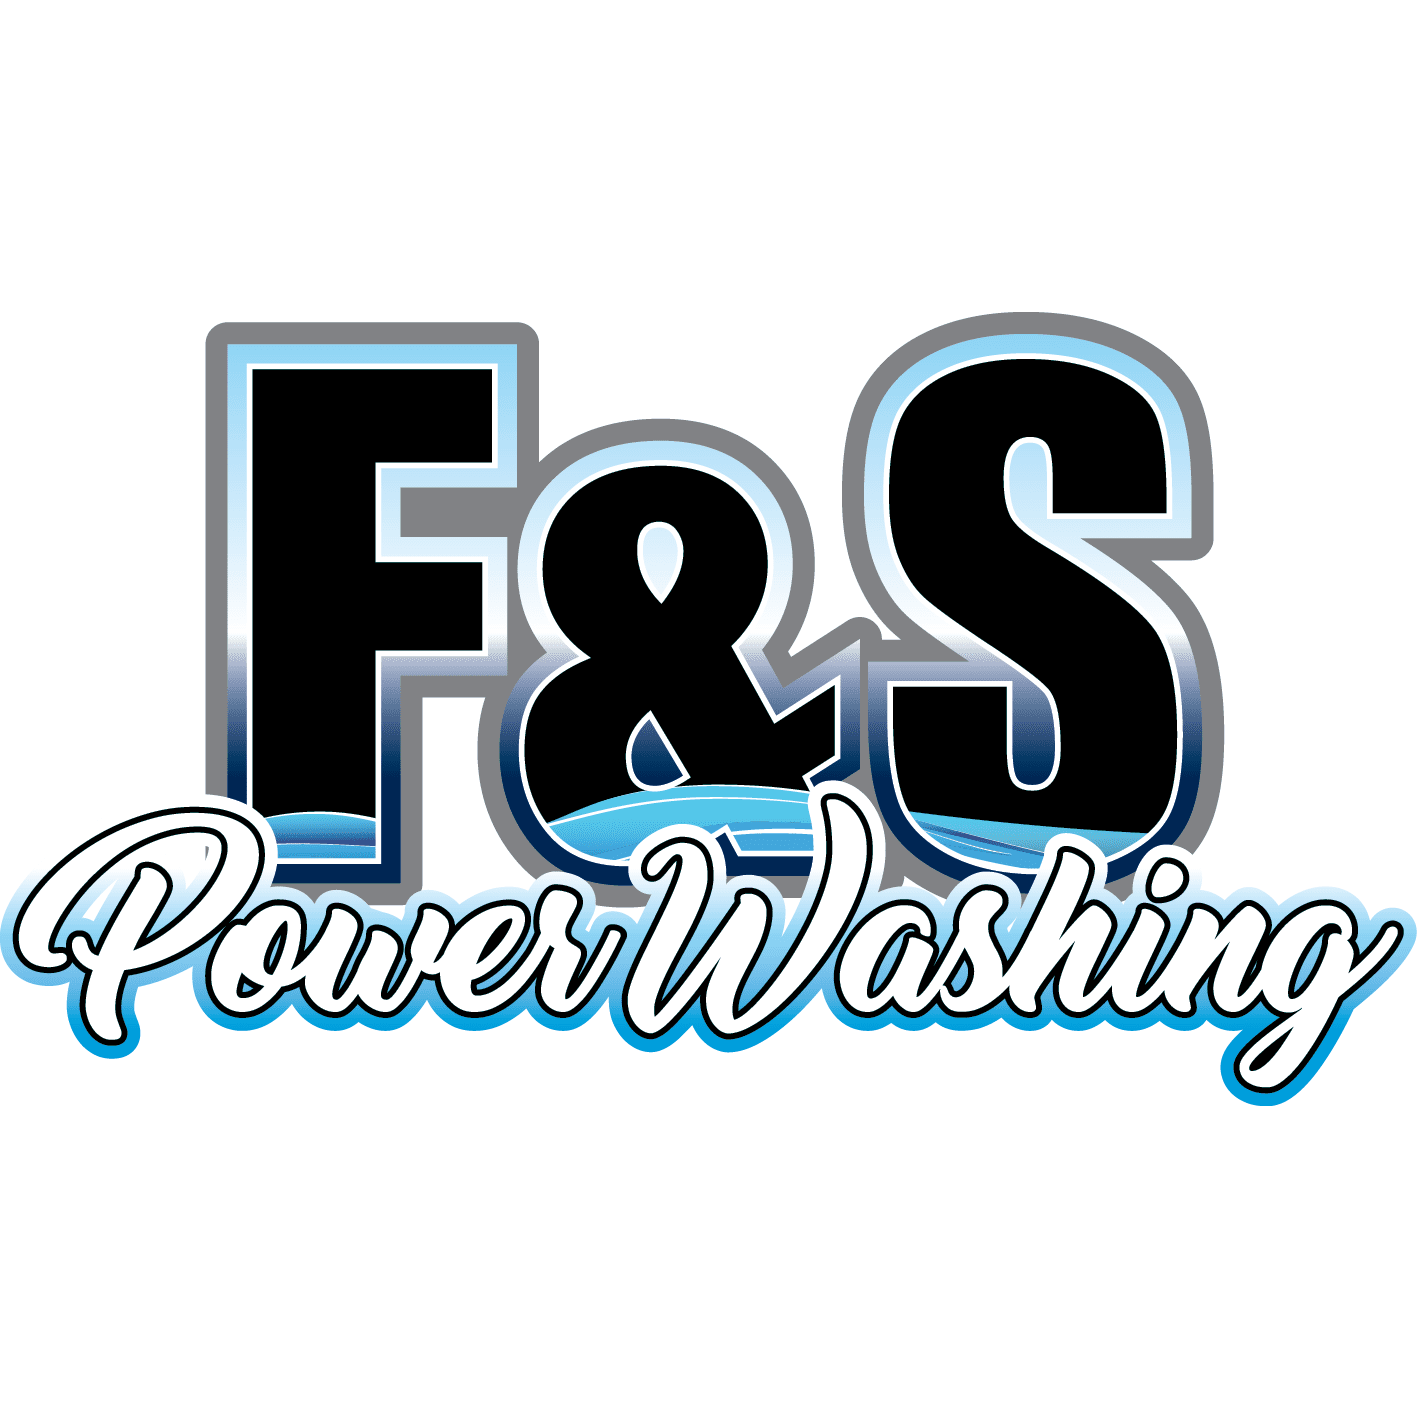 Power Washing Services in Farragut TN